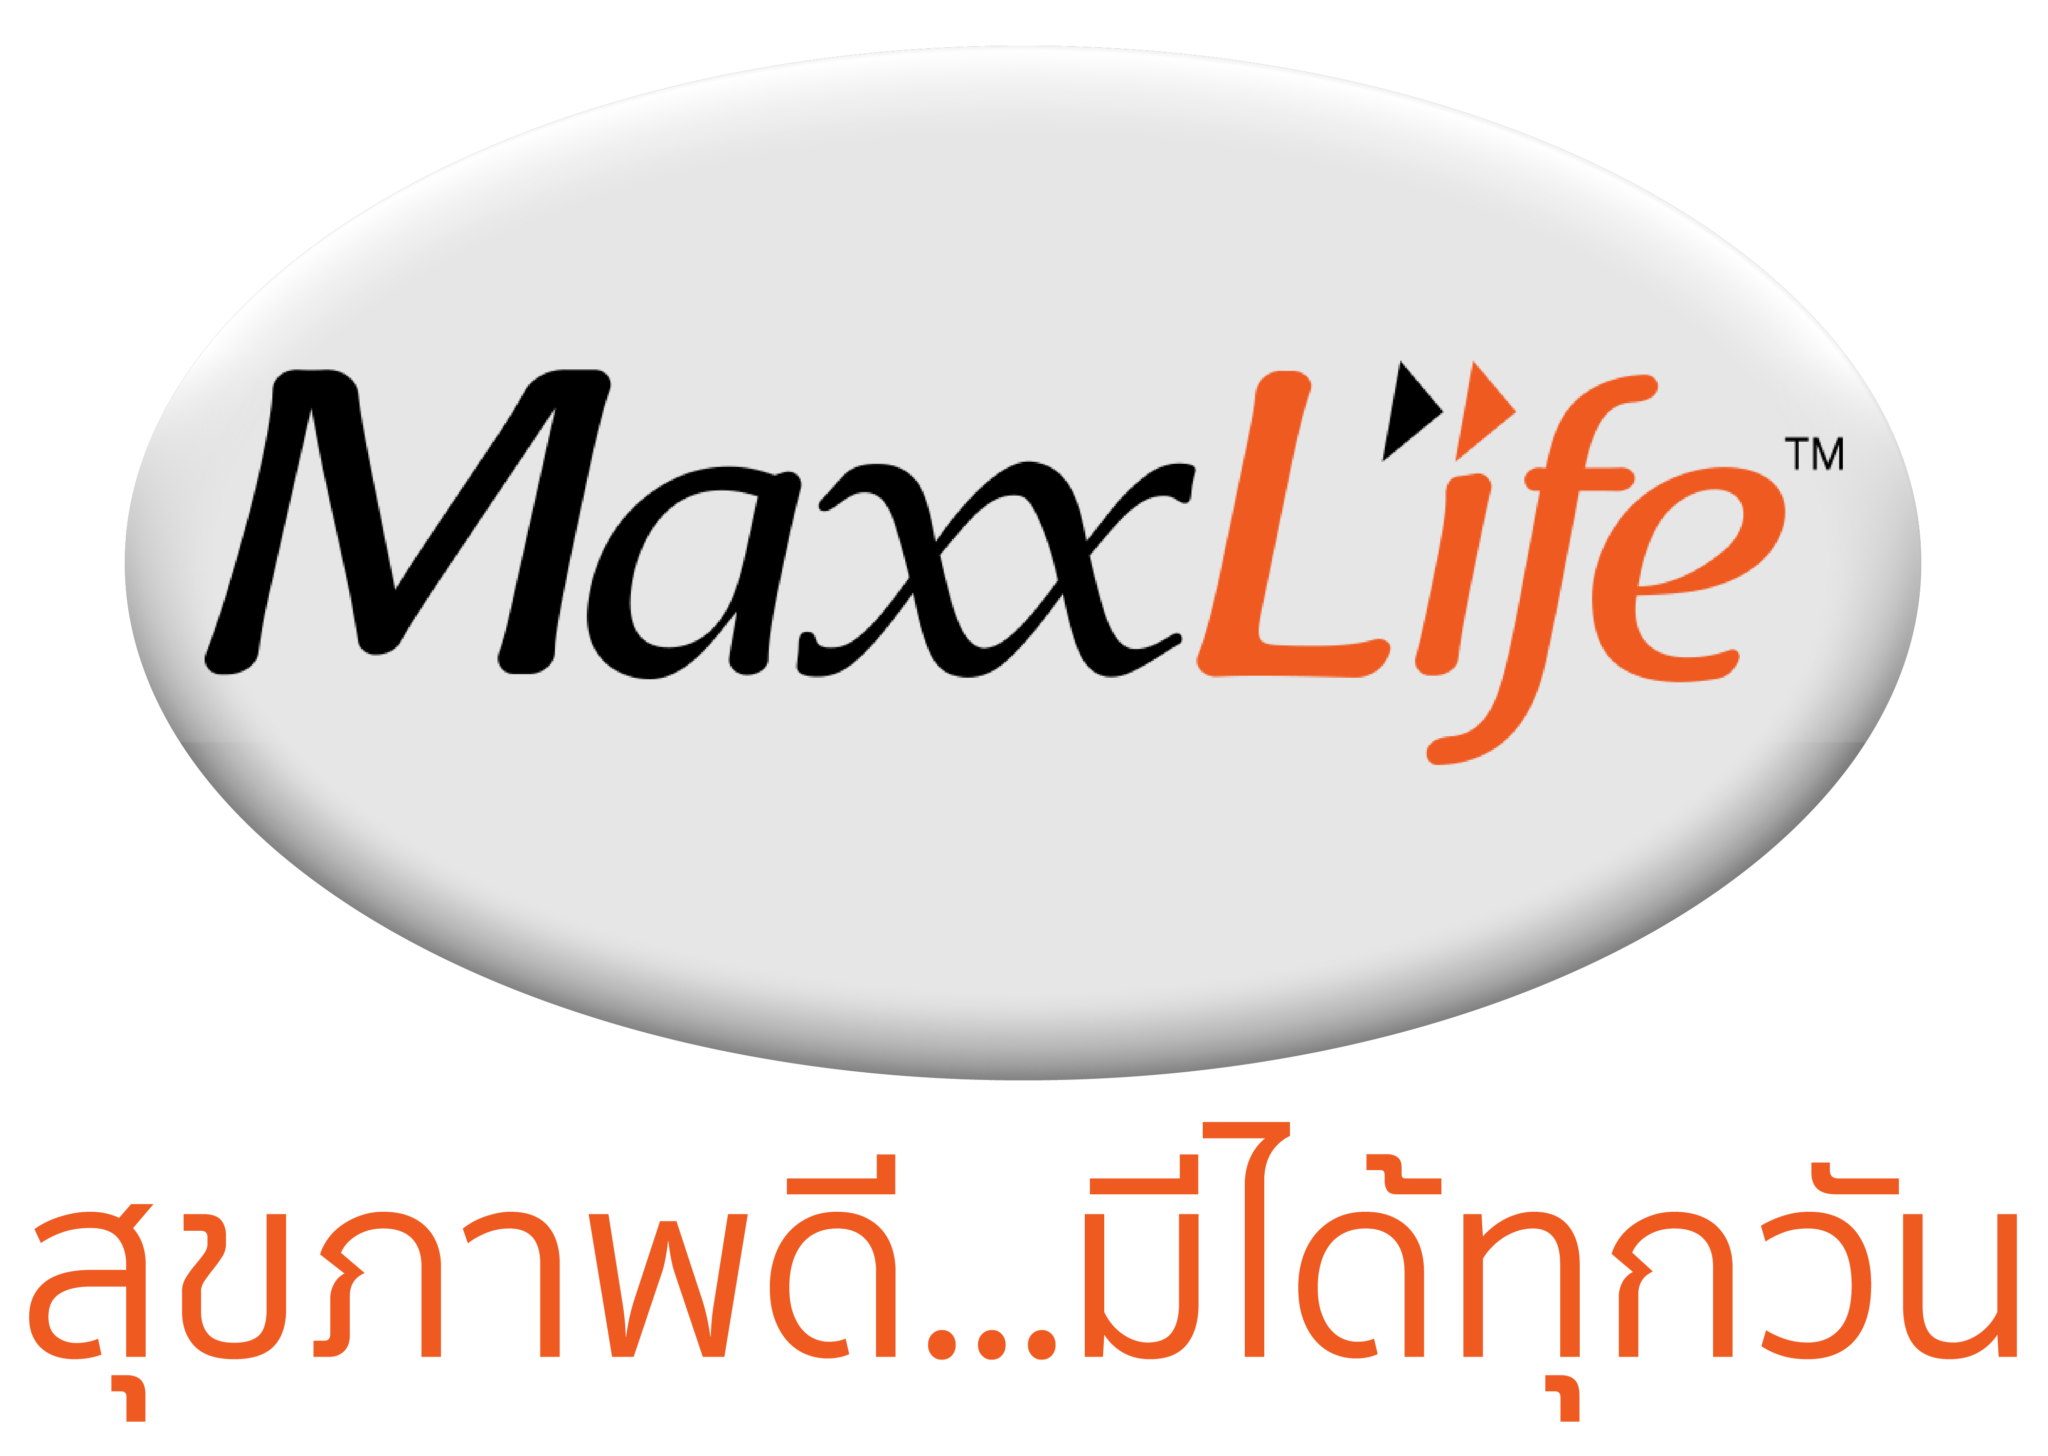 Maxxlife  